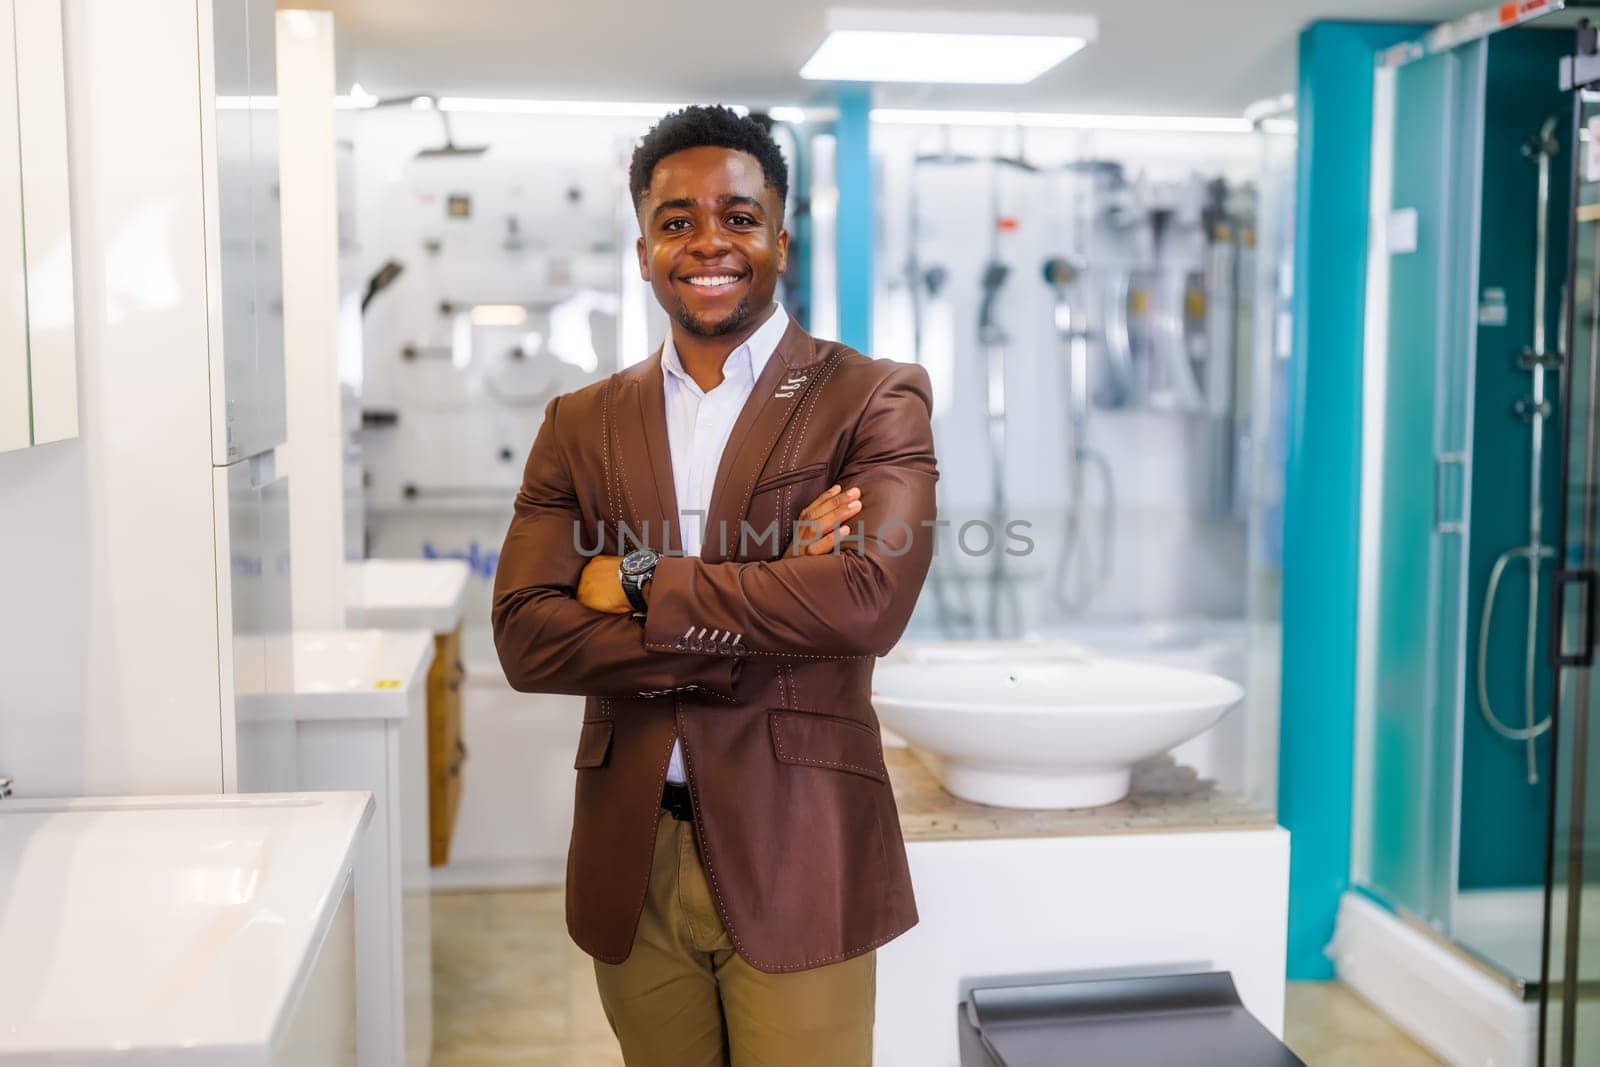 Portrait of salesperson in bathroom store. Happy man works in bath store. Sales occupation.